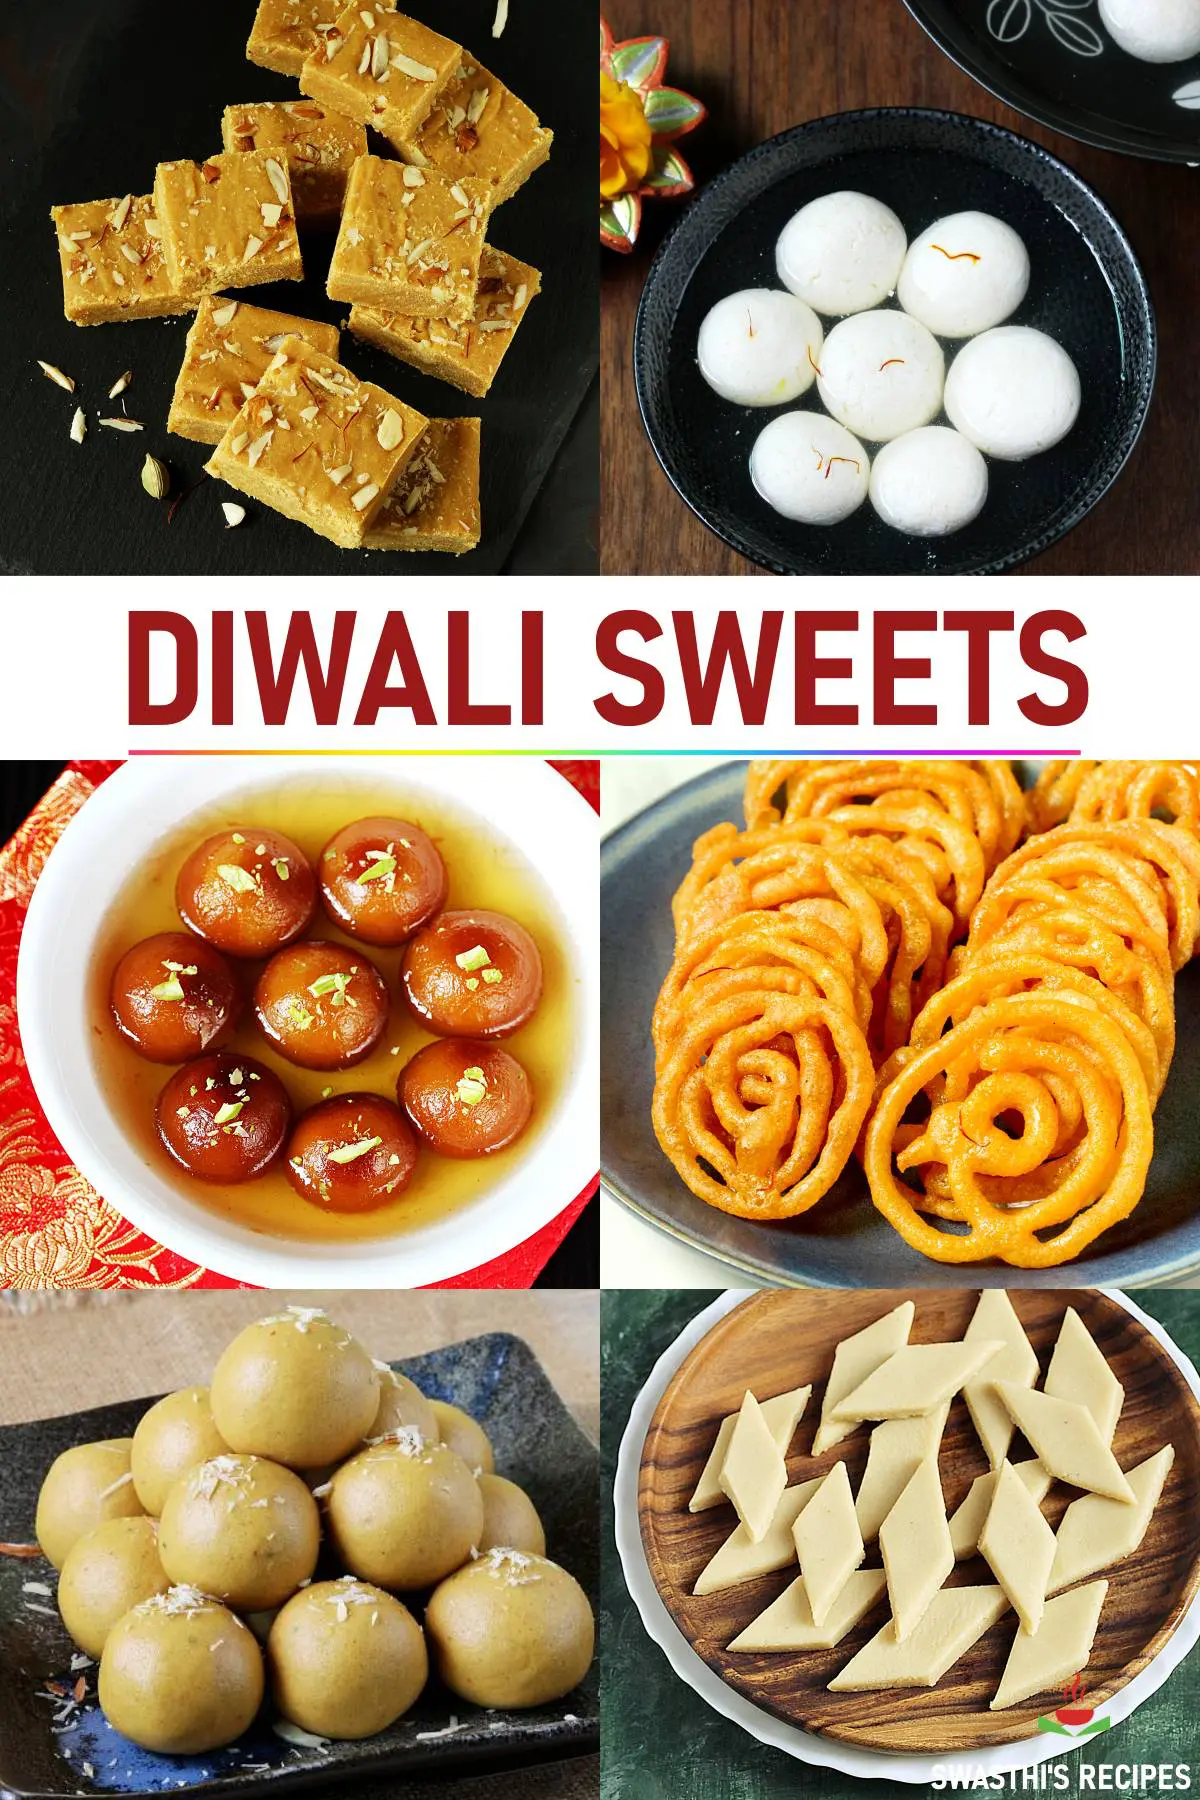 Diwali Sweets Recipes 2022 | Diwali Recipes - Swasthi's Recipes